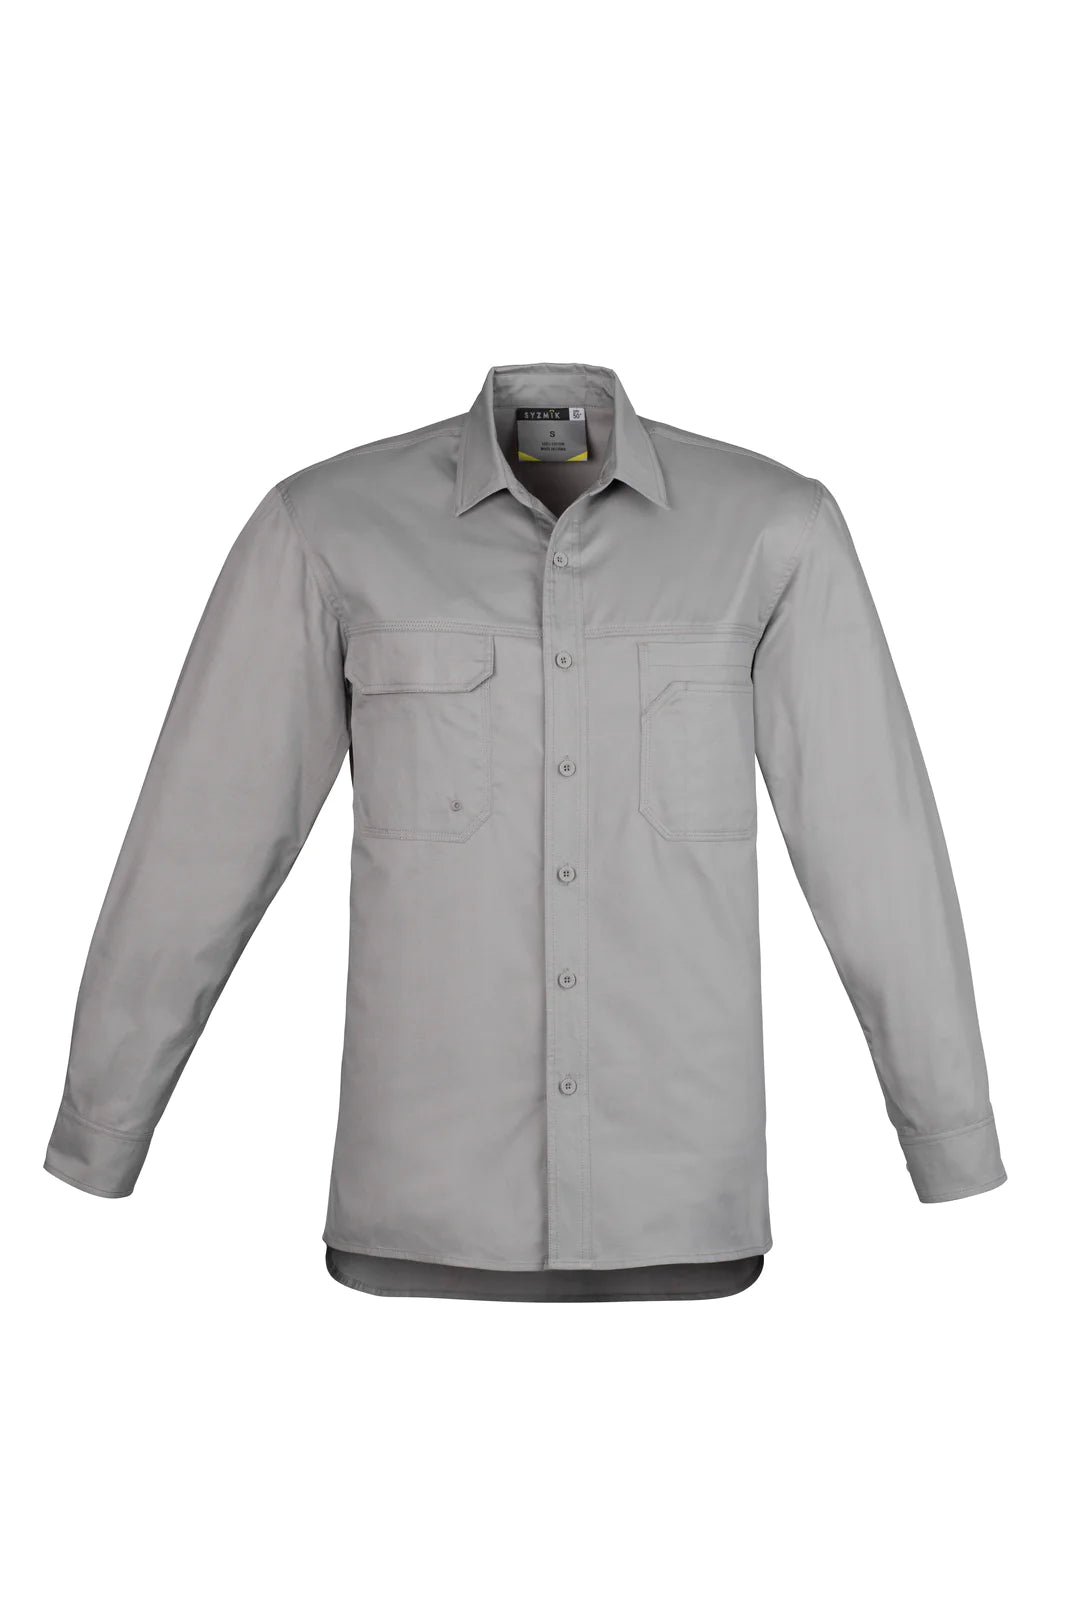 ZW121 Tradie  Long Sleeve Shirt